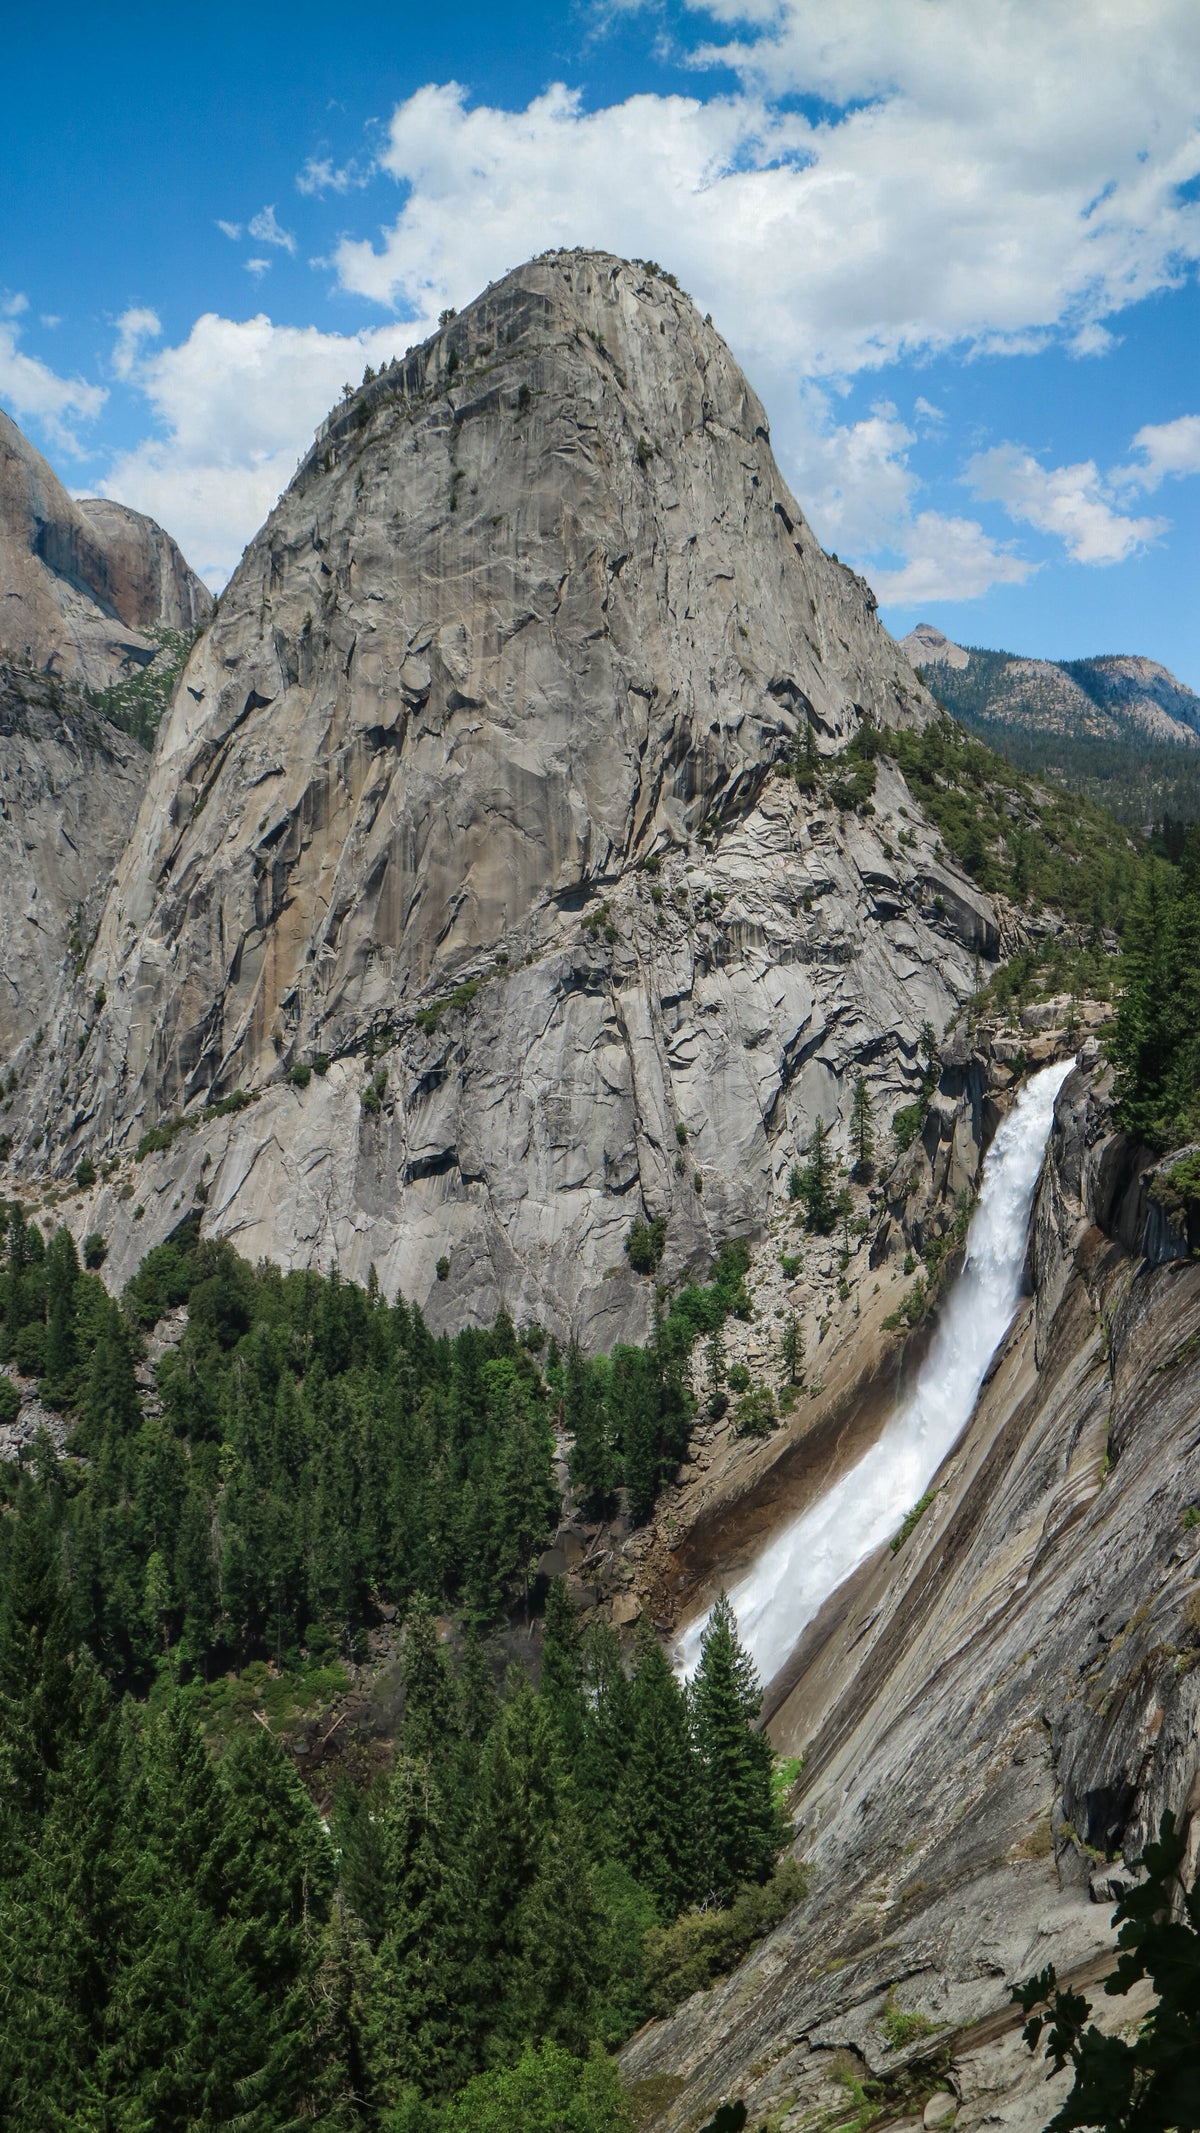 large mountain range with a narrow waterfall